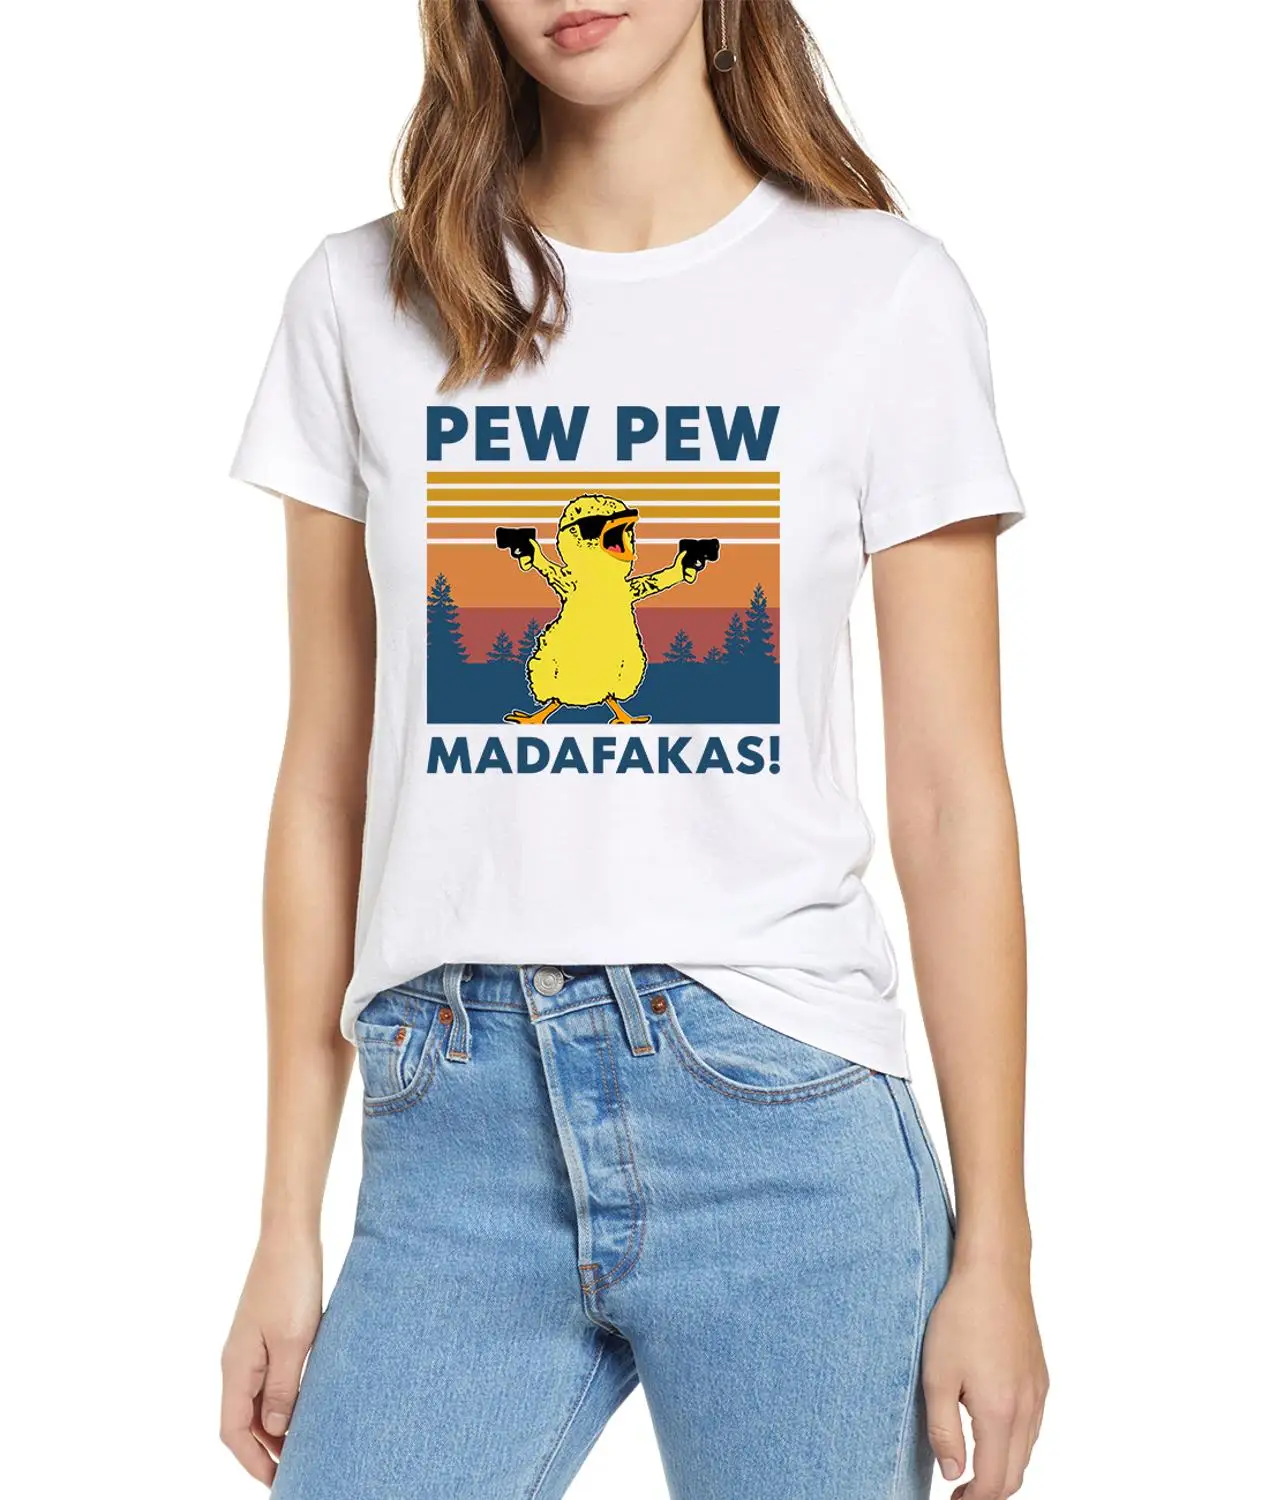 

Pew Pew Madafakas Funny Chicken Gangster Meme Vintage 2020 Summer Women's 100% cotton short sleeves T-Shirt Humor Gift Tops tee